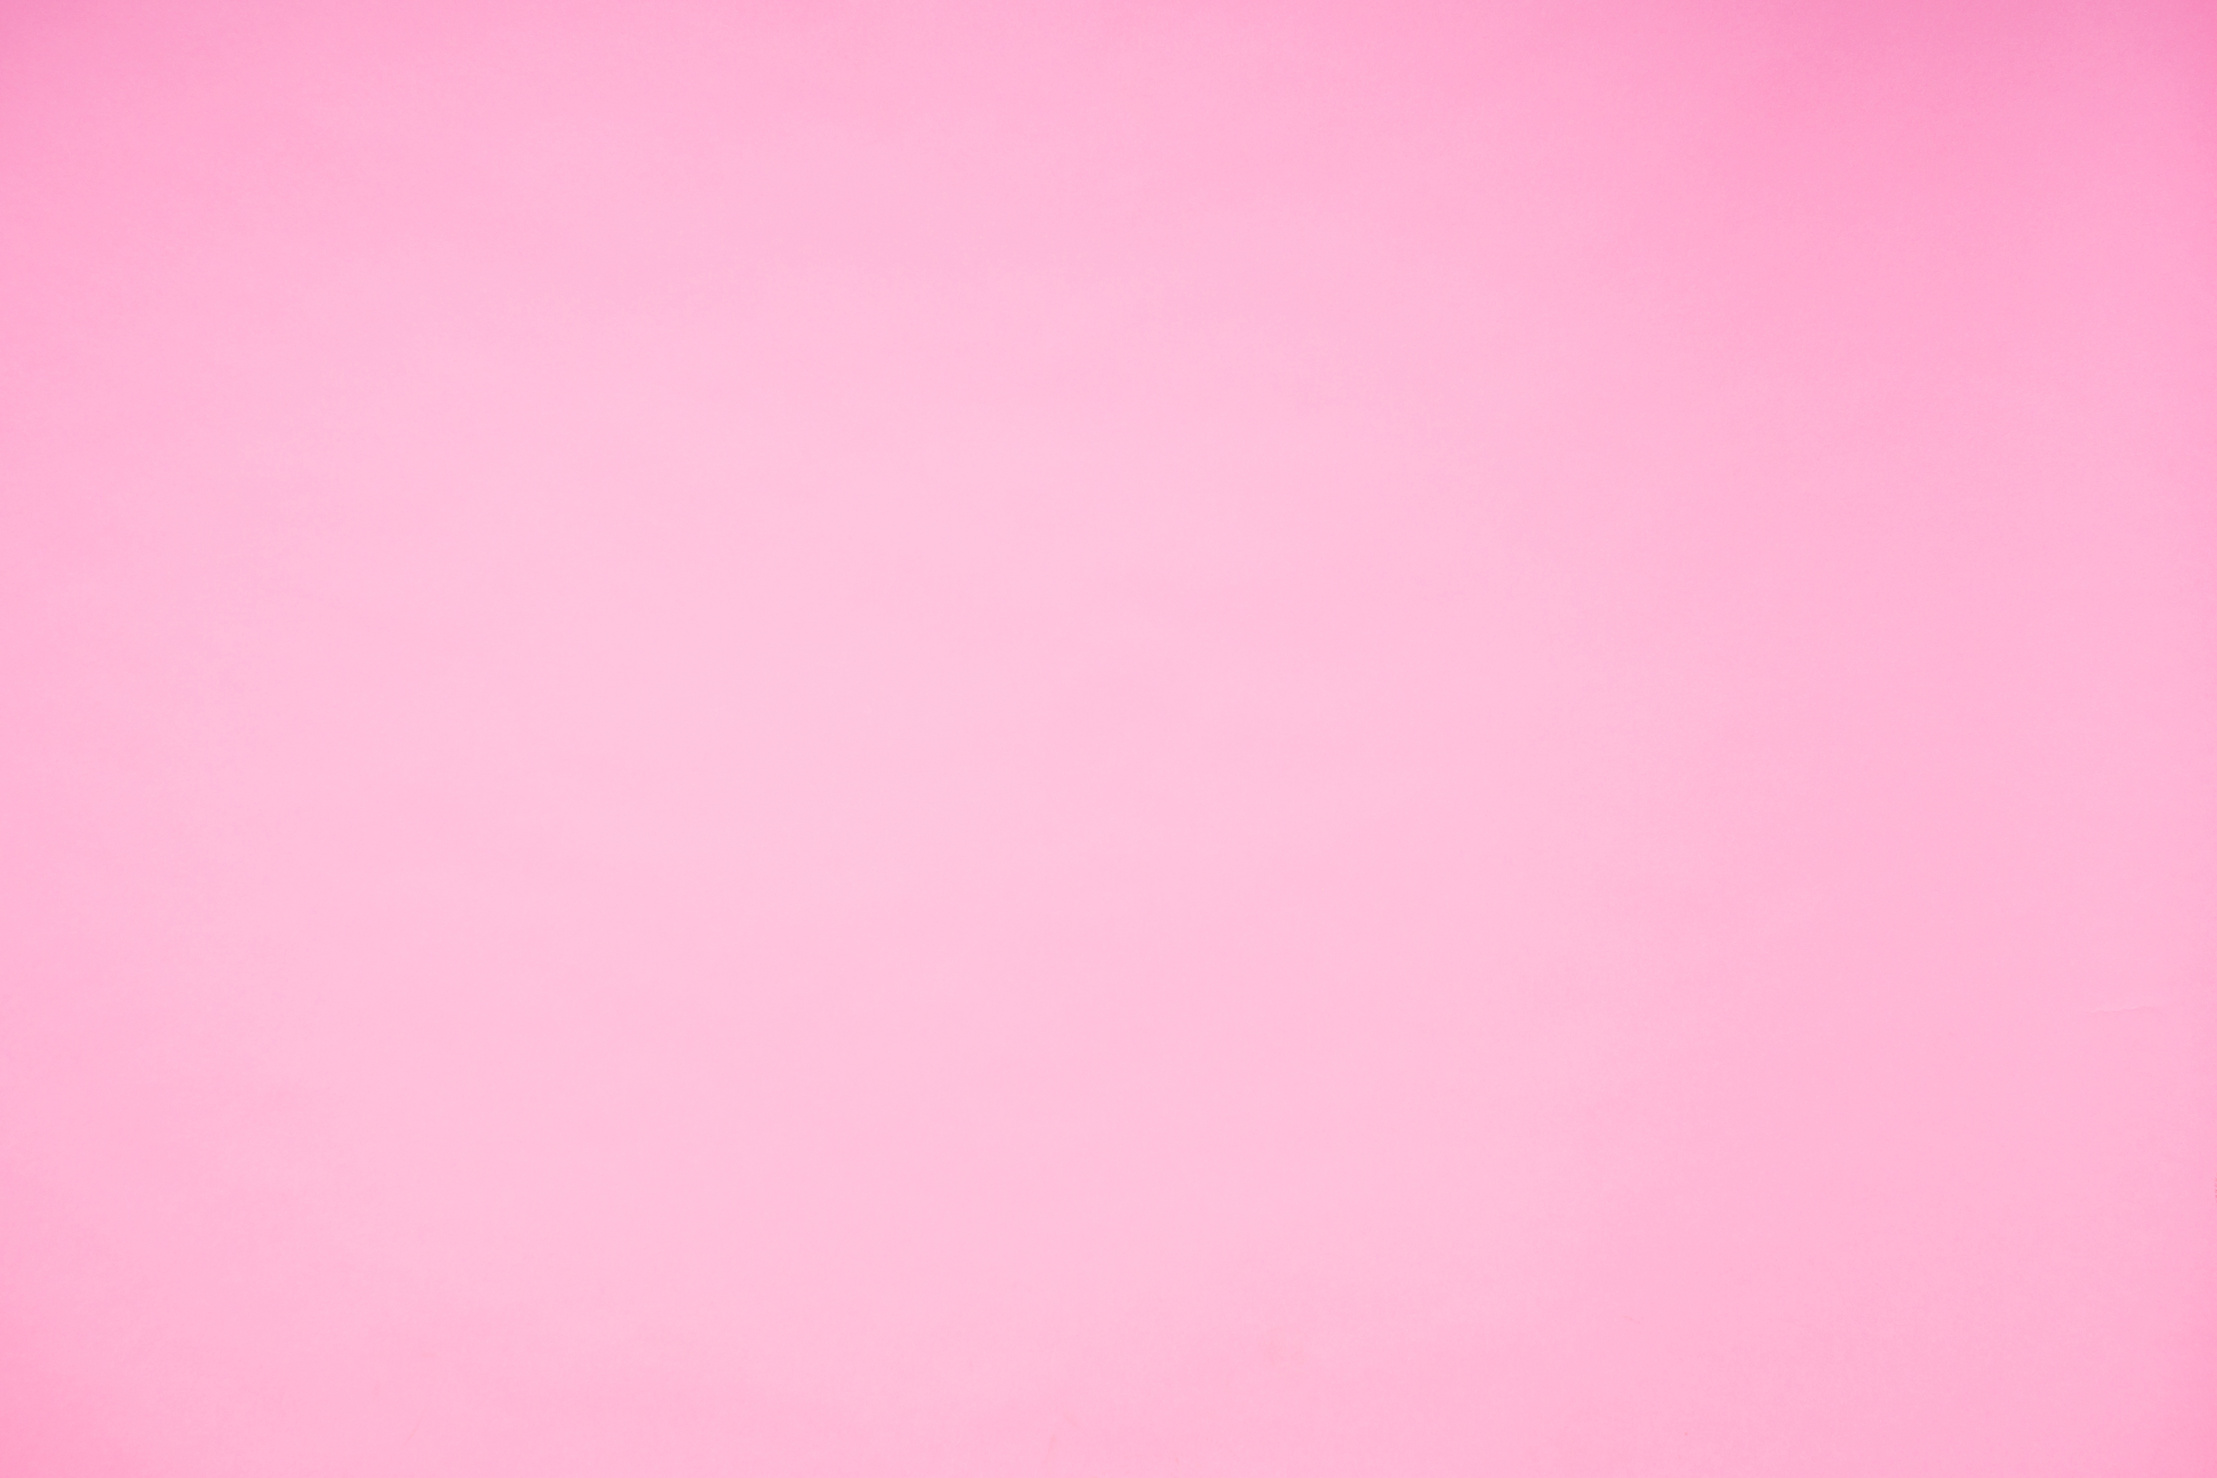 Blurred Backgrounds Pink Background Studio